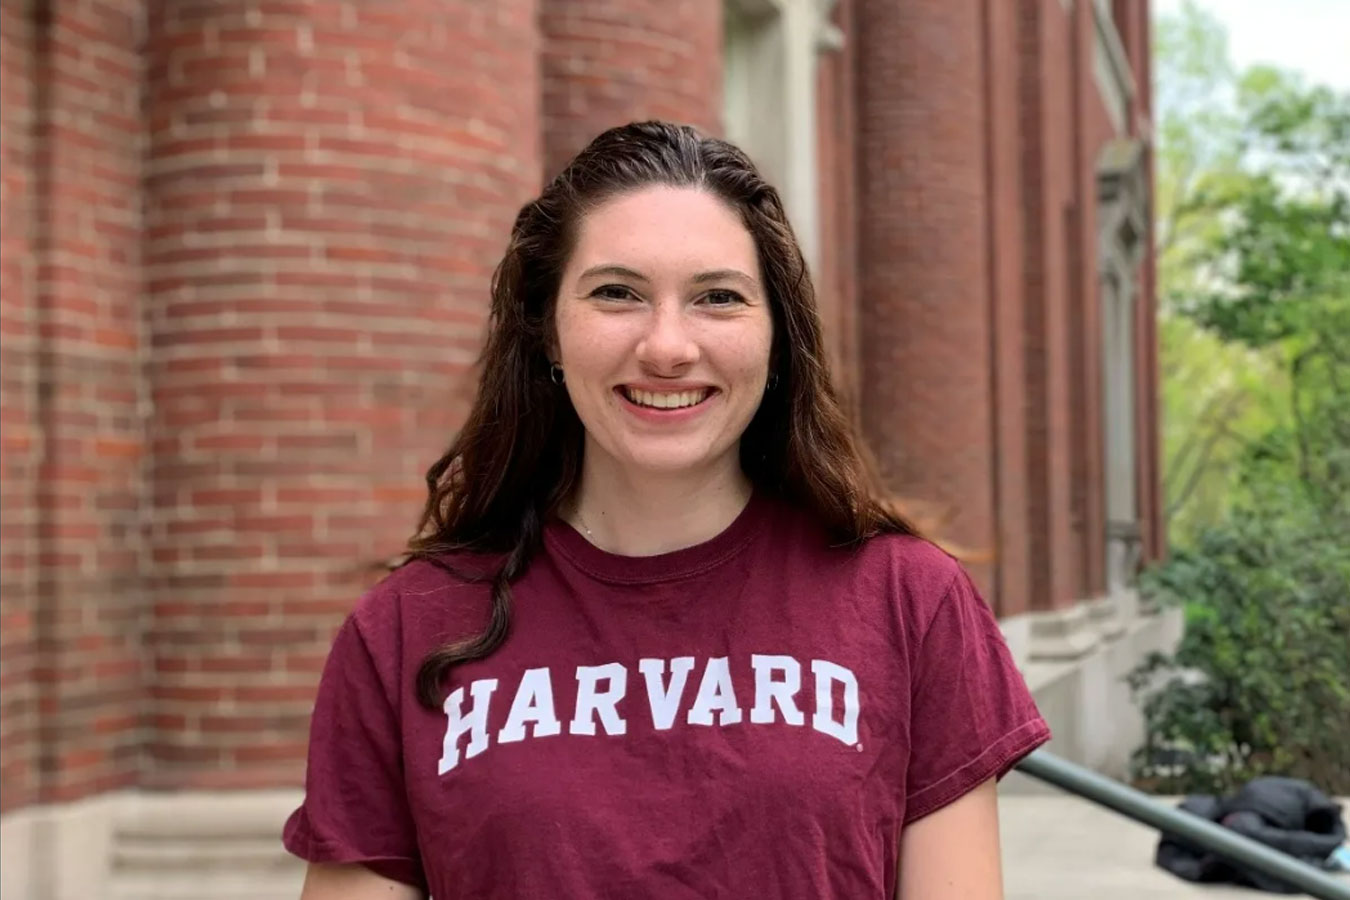 Teen in Harvard University shirt smiling in front of brick building